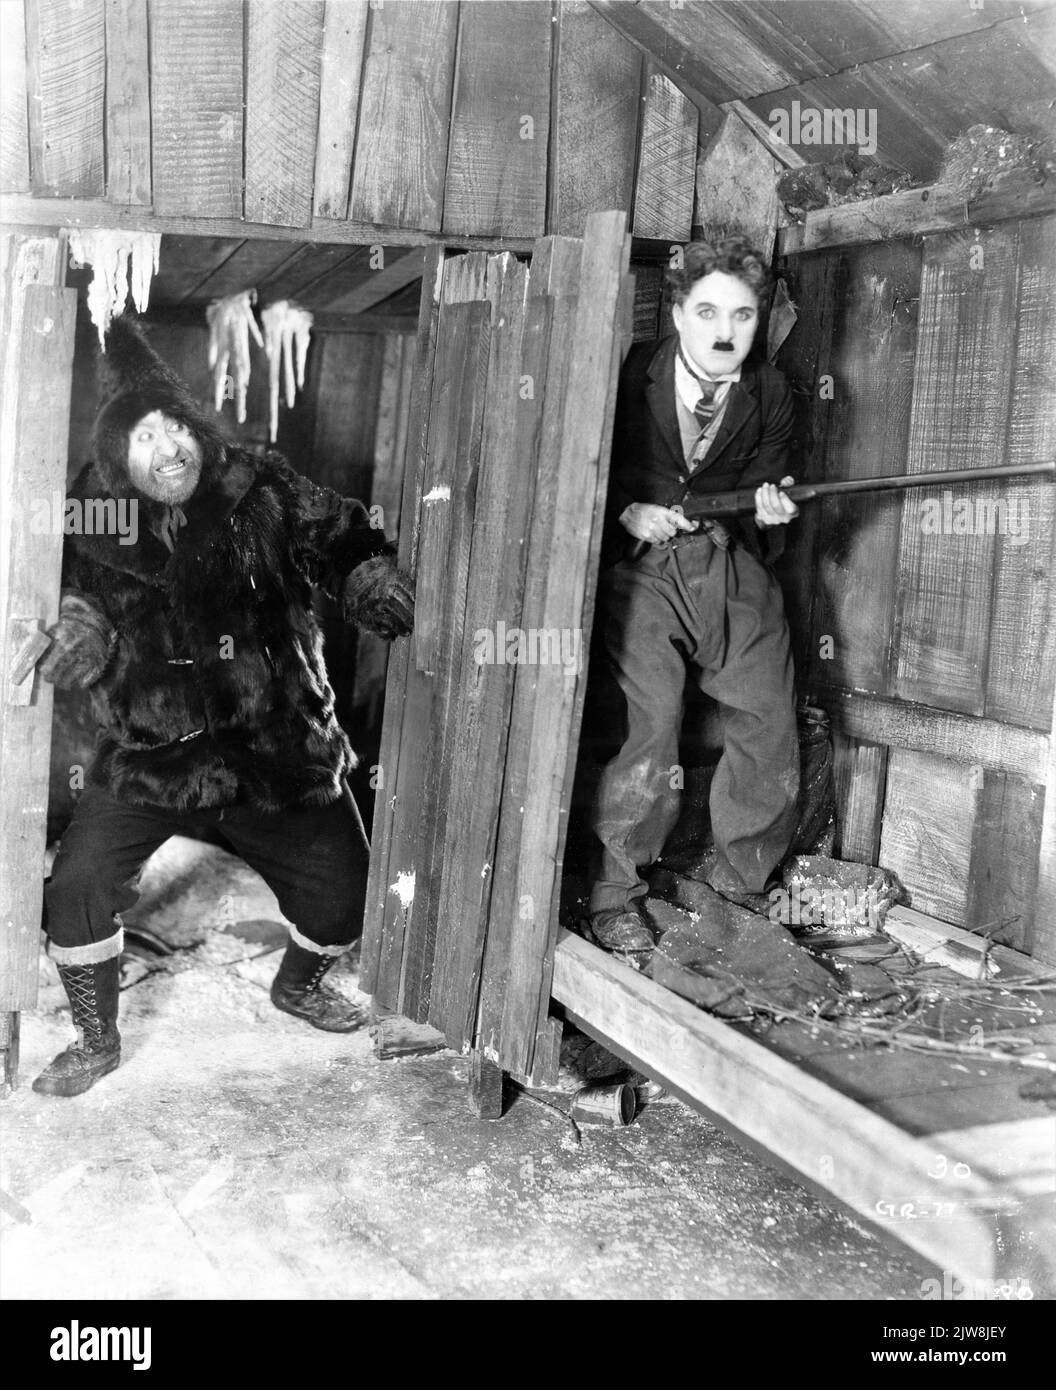 MACK SWAIN e CHARLIE CHAPLIN in ORO RUSH 1925 regista / scrittore CHARLES CHAPLIN Charles Chaplin Productions / Artisti Uniti Foto Stock